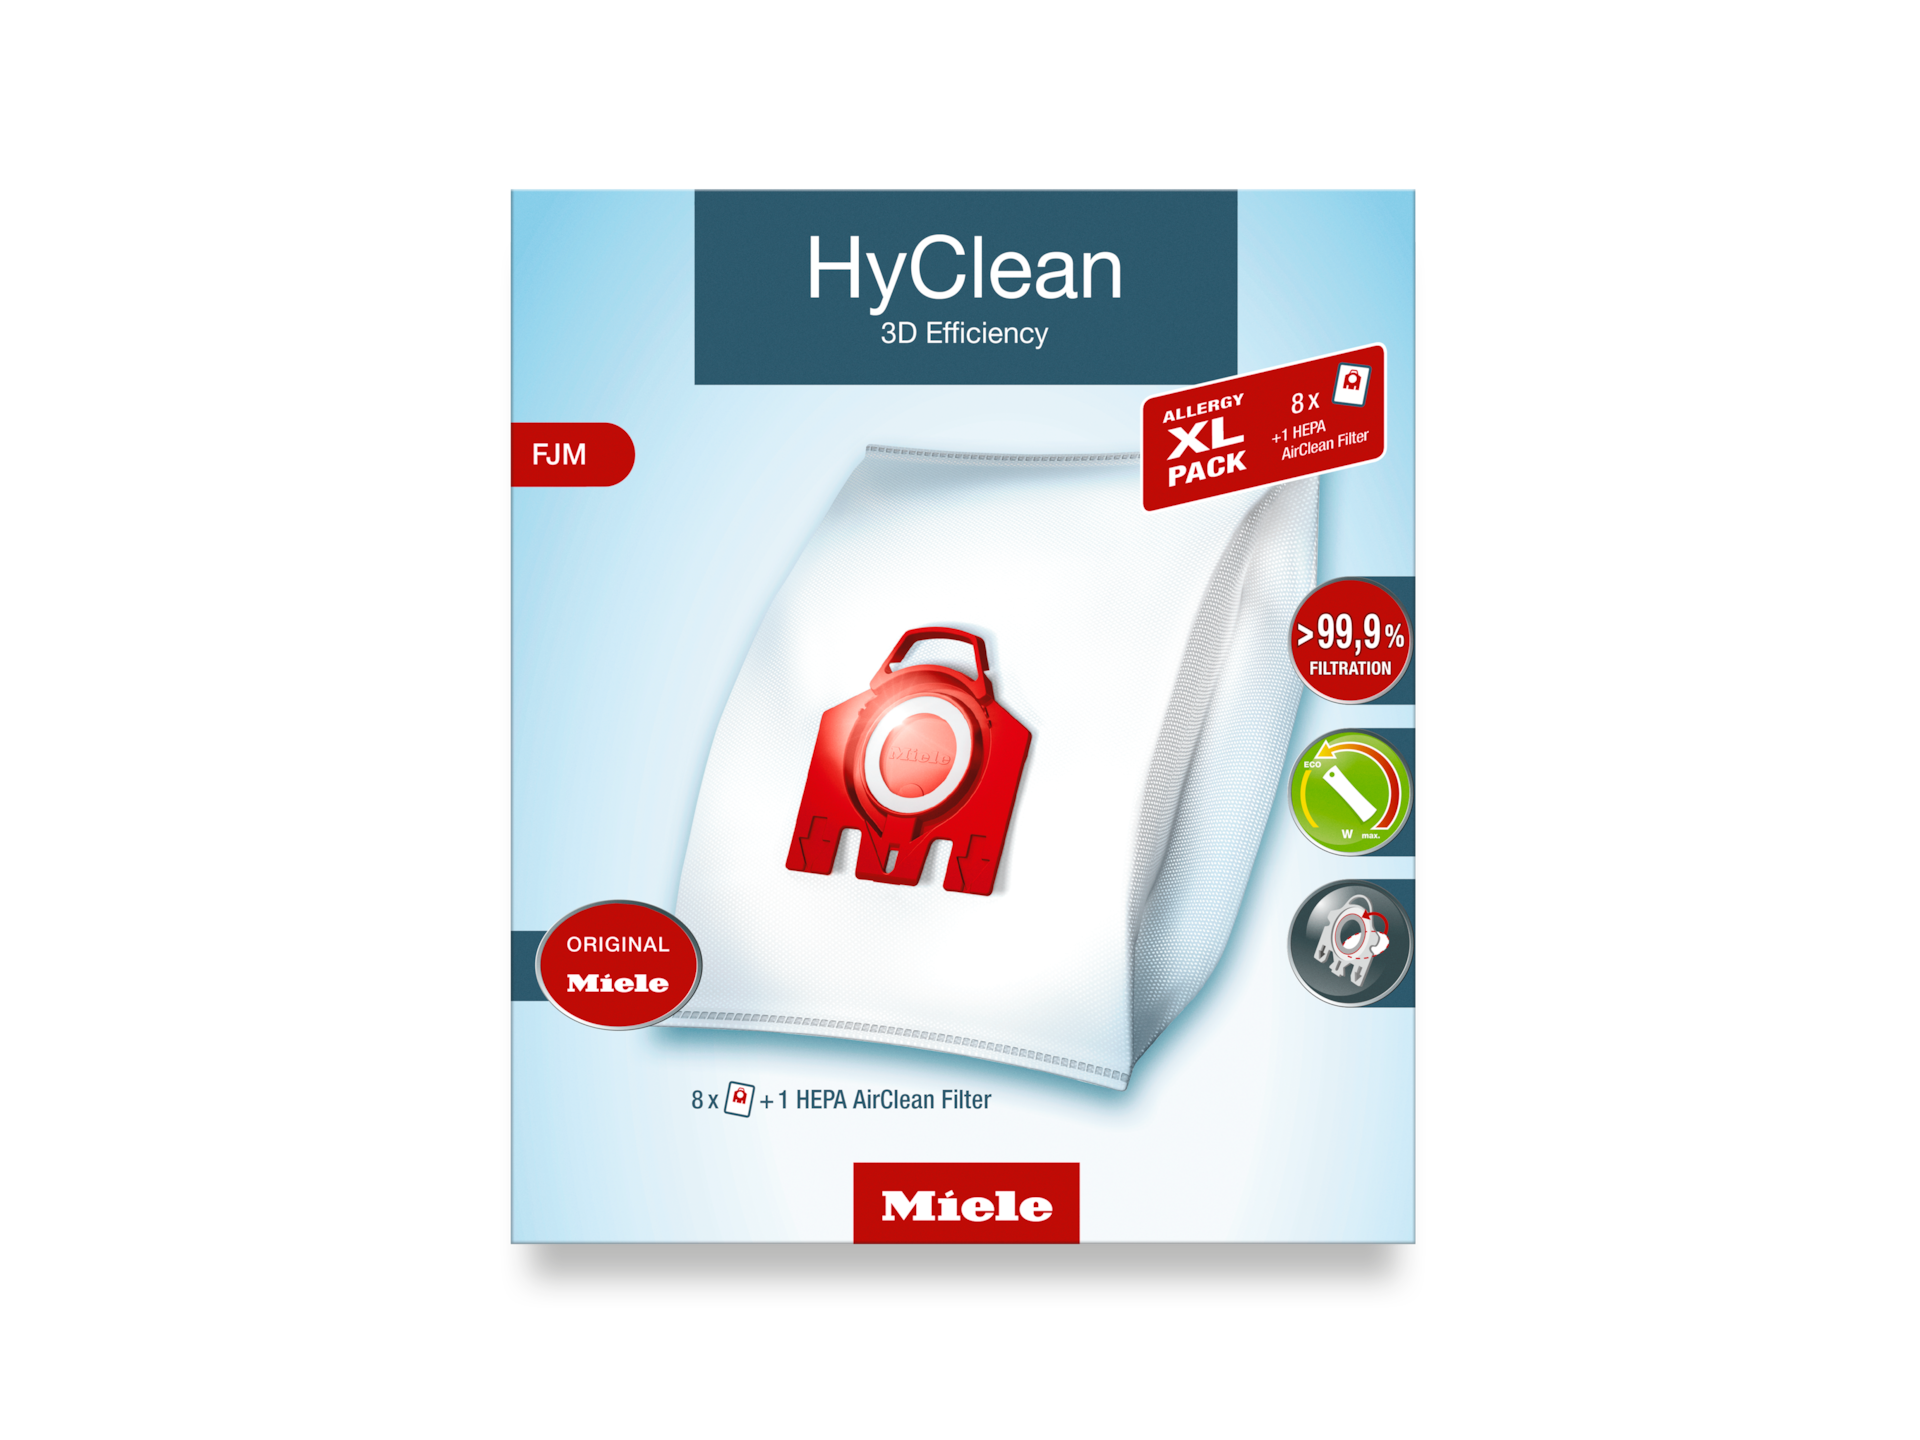 Accesorios - FJM Allergy XL HyClean 3D - 1